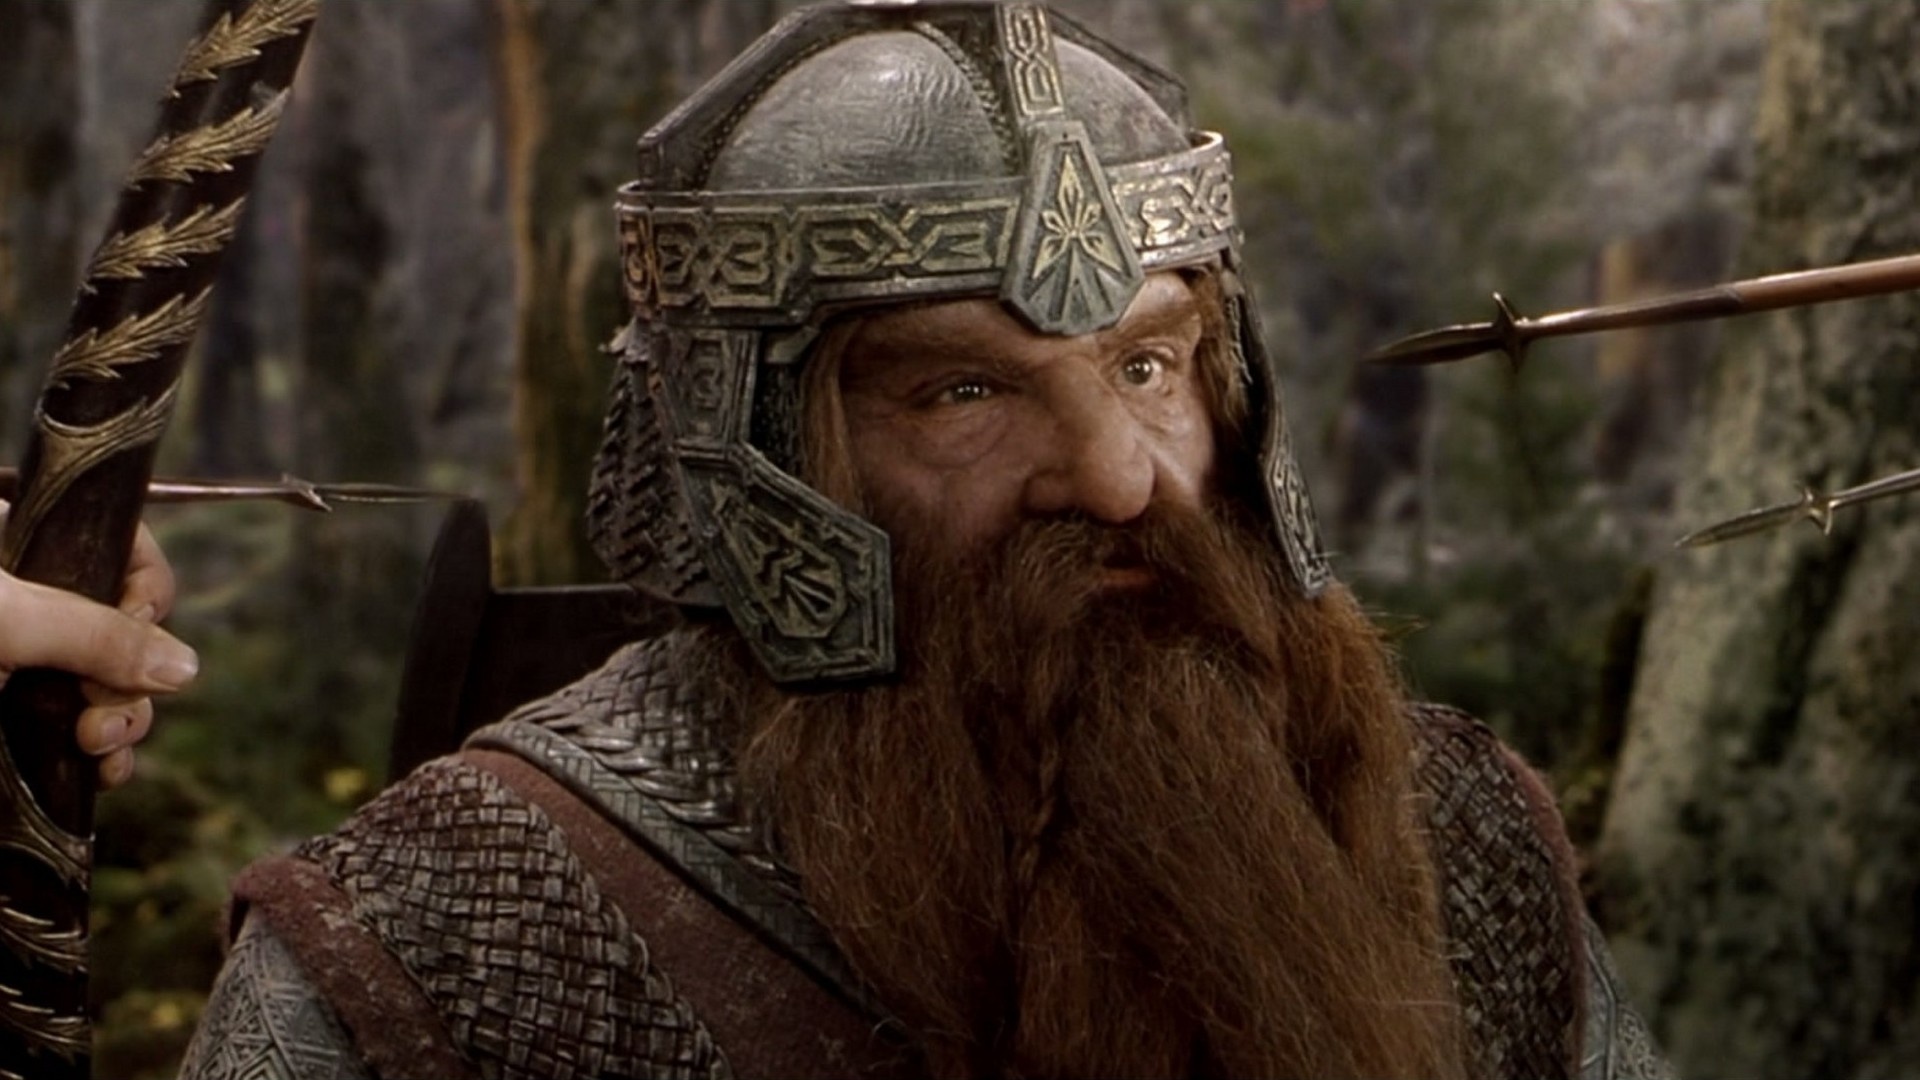 Dwarves (The Lord of the Rings): The Fellowship of the Ring, John Rhys-Davies as Gimli. 1920x1080 Full HD Wallpaper.